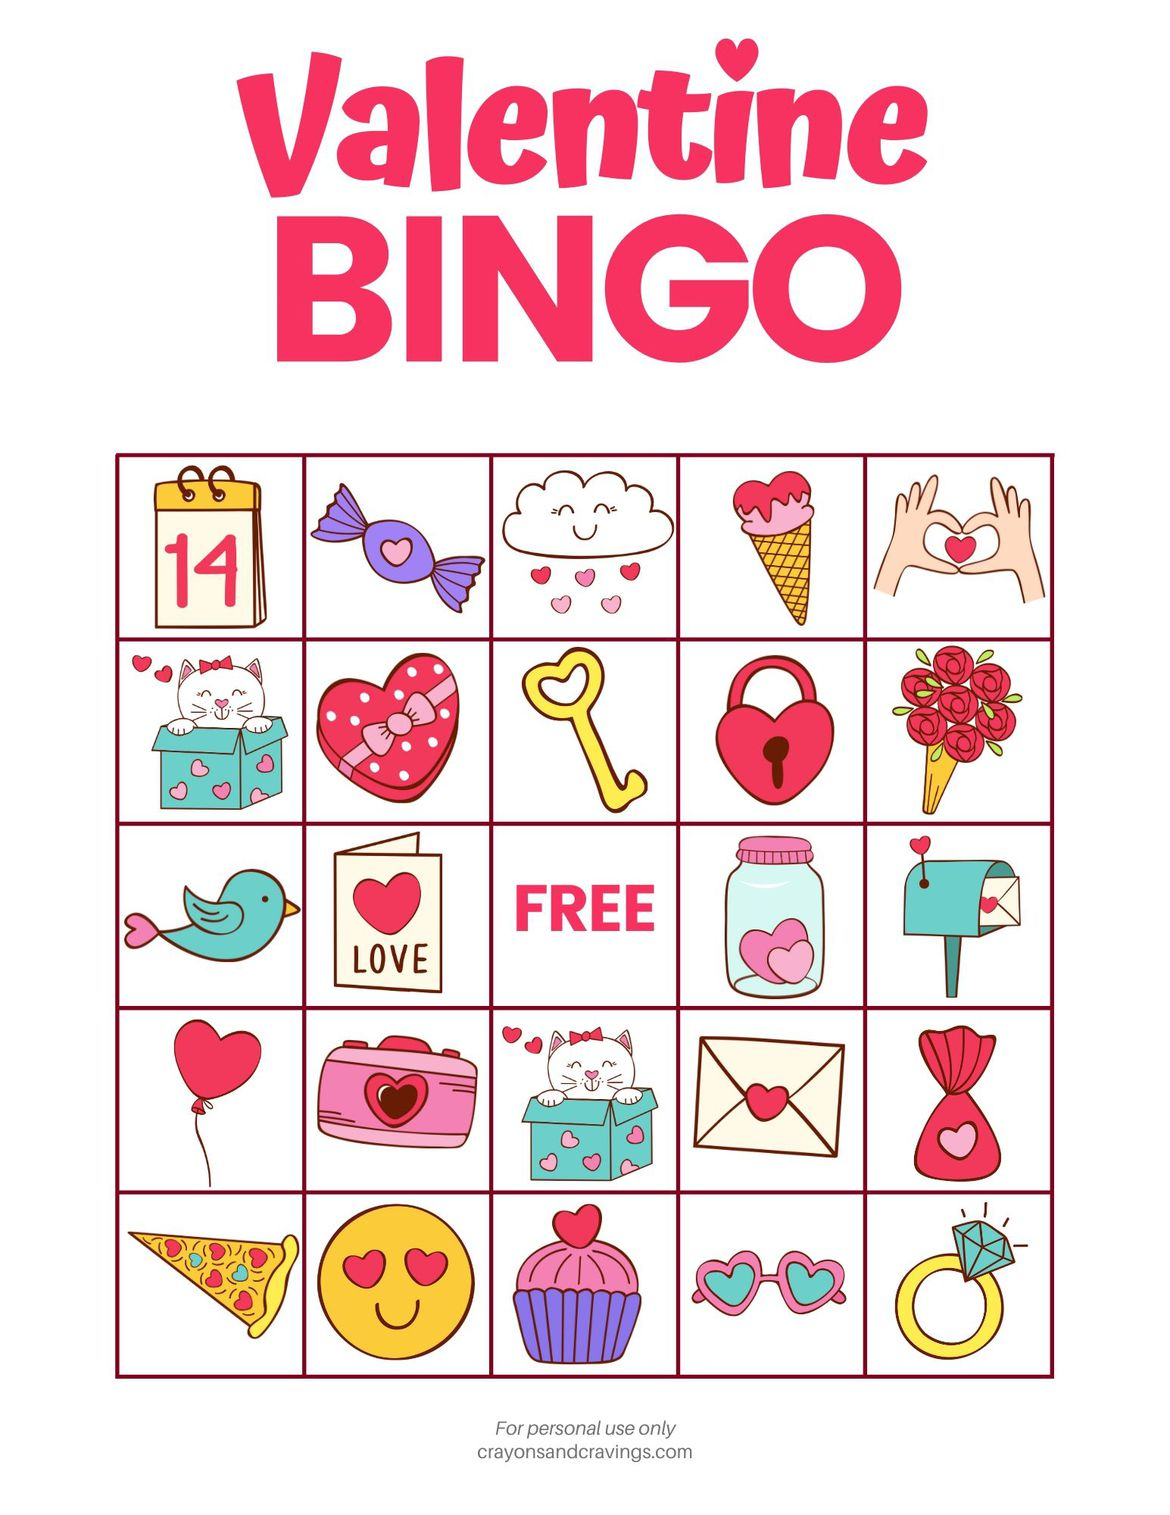 Valentine Bingo FREE Printable Valentine s Day Game With 